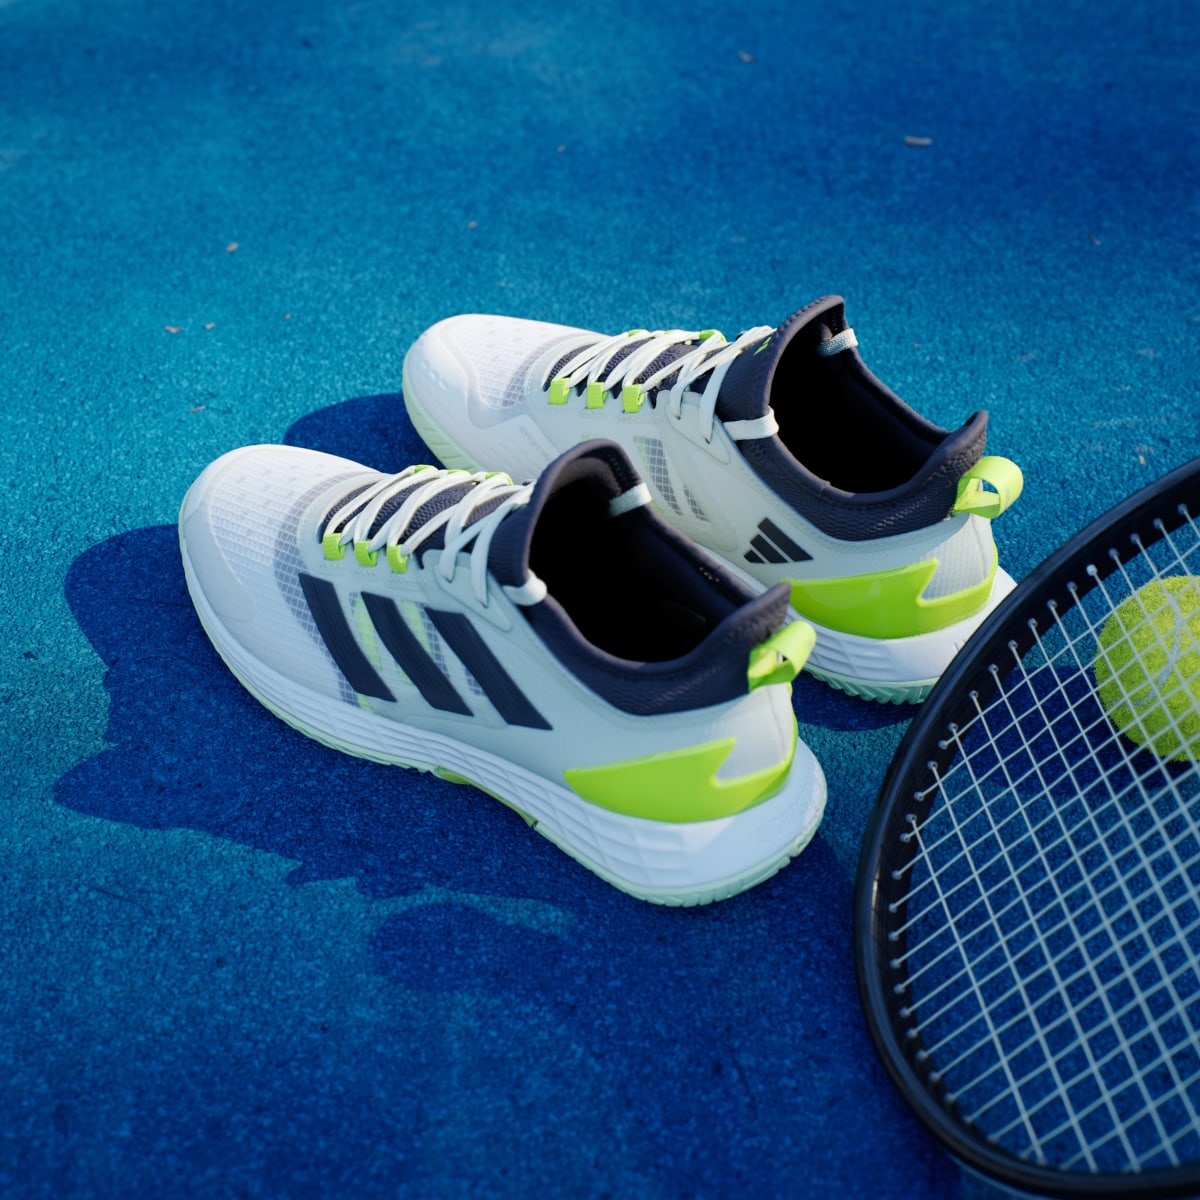 Adidas Tenis Adizero Ubersonic 4.1 para Tenis. 6